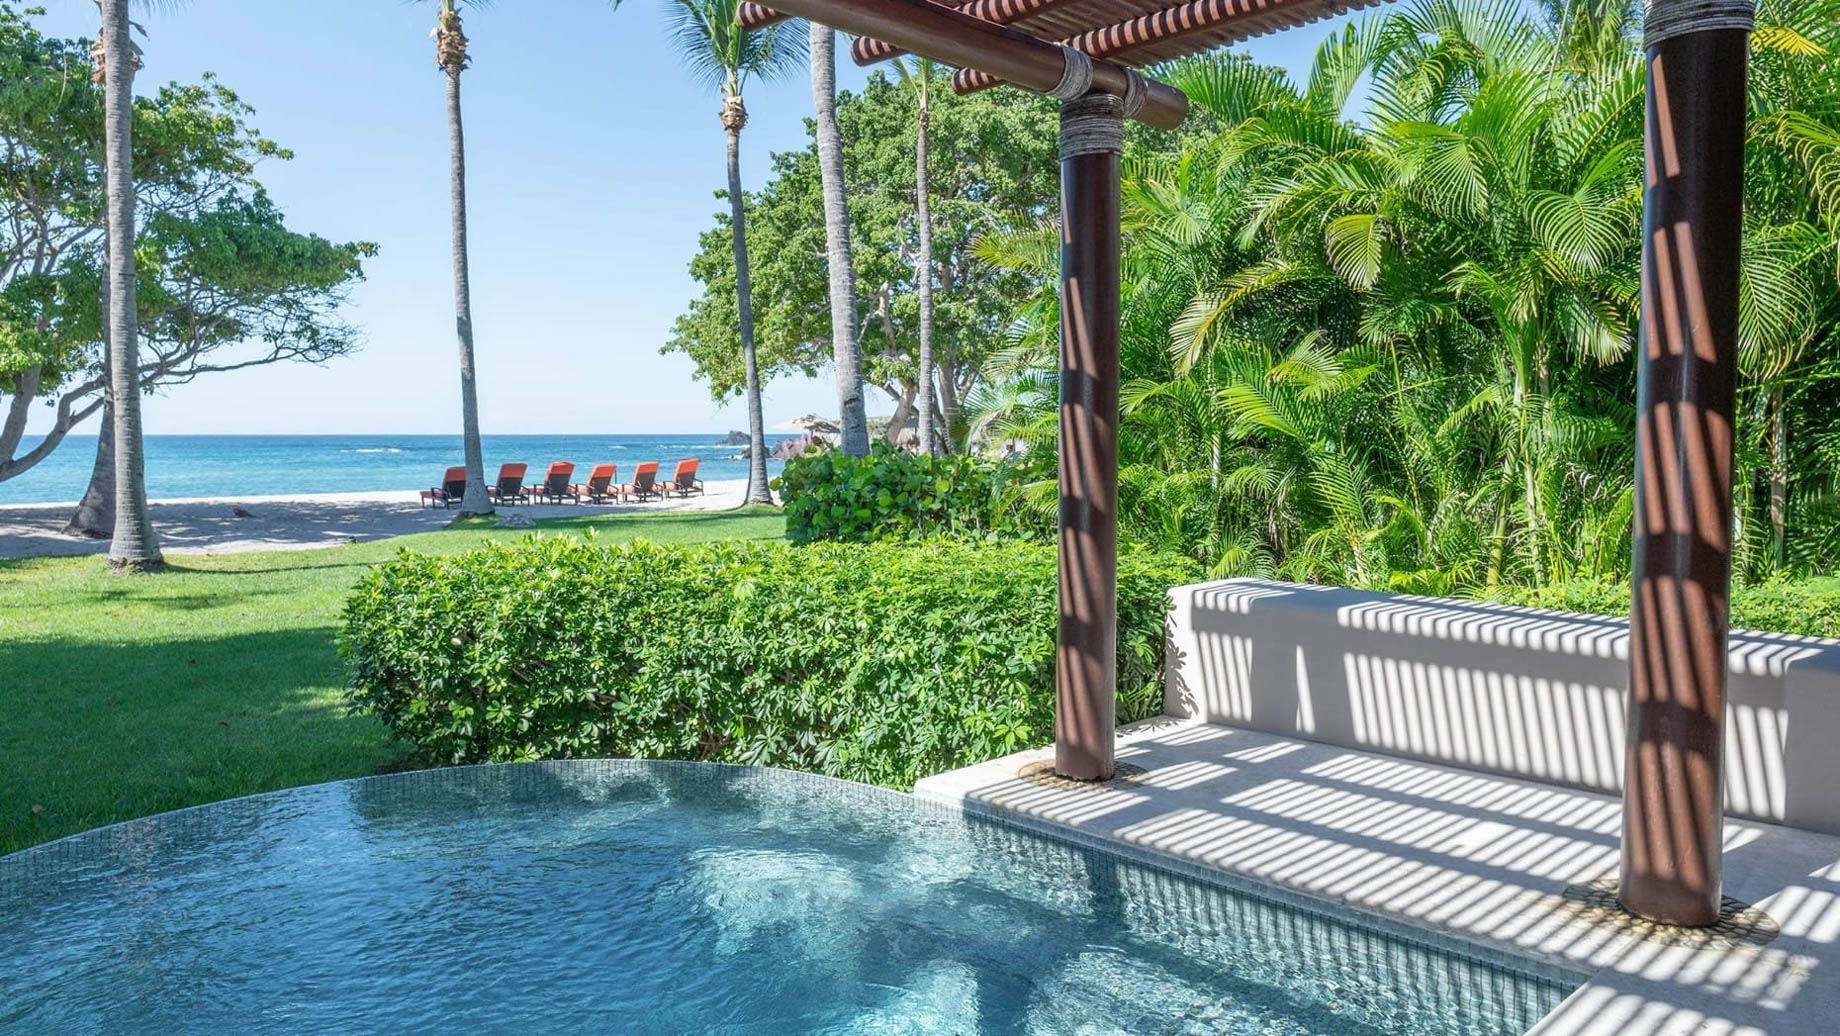 Four Seasons Resort Punta Mita – Nayarit, Mexico – Arena Beach House Pool Deck